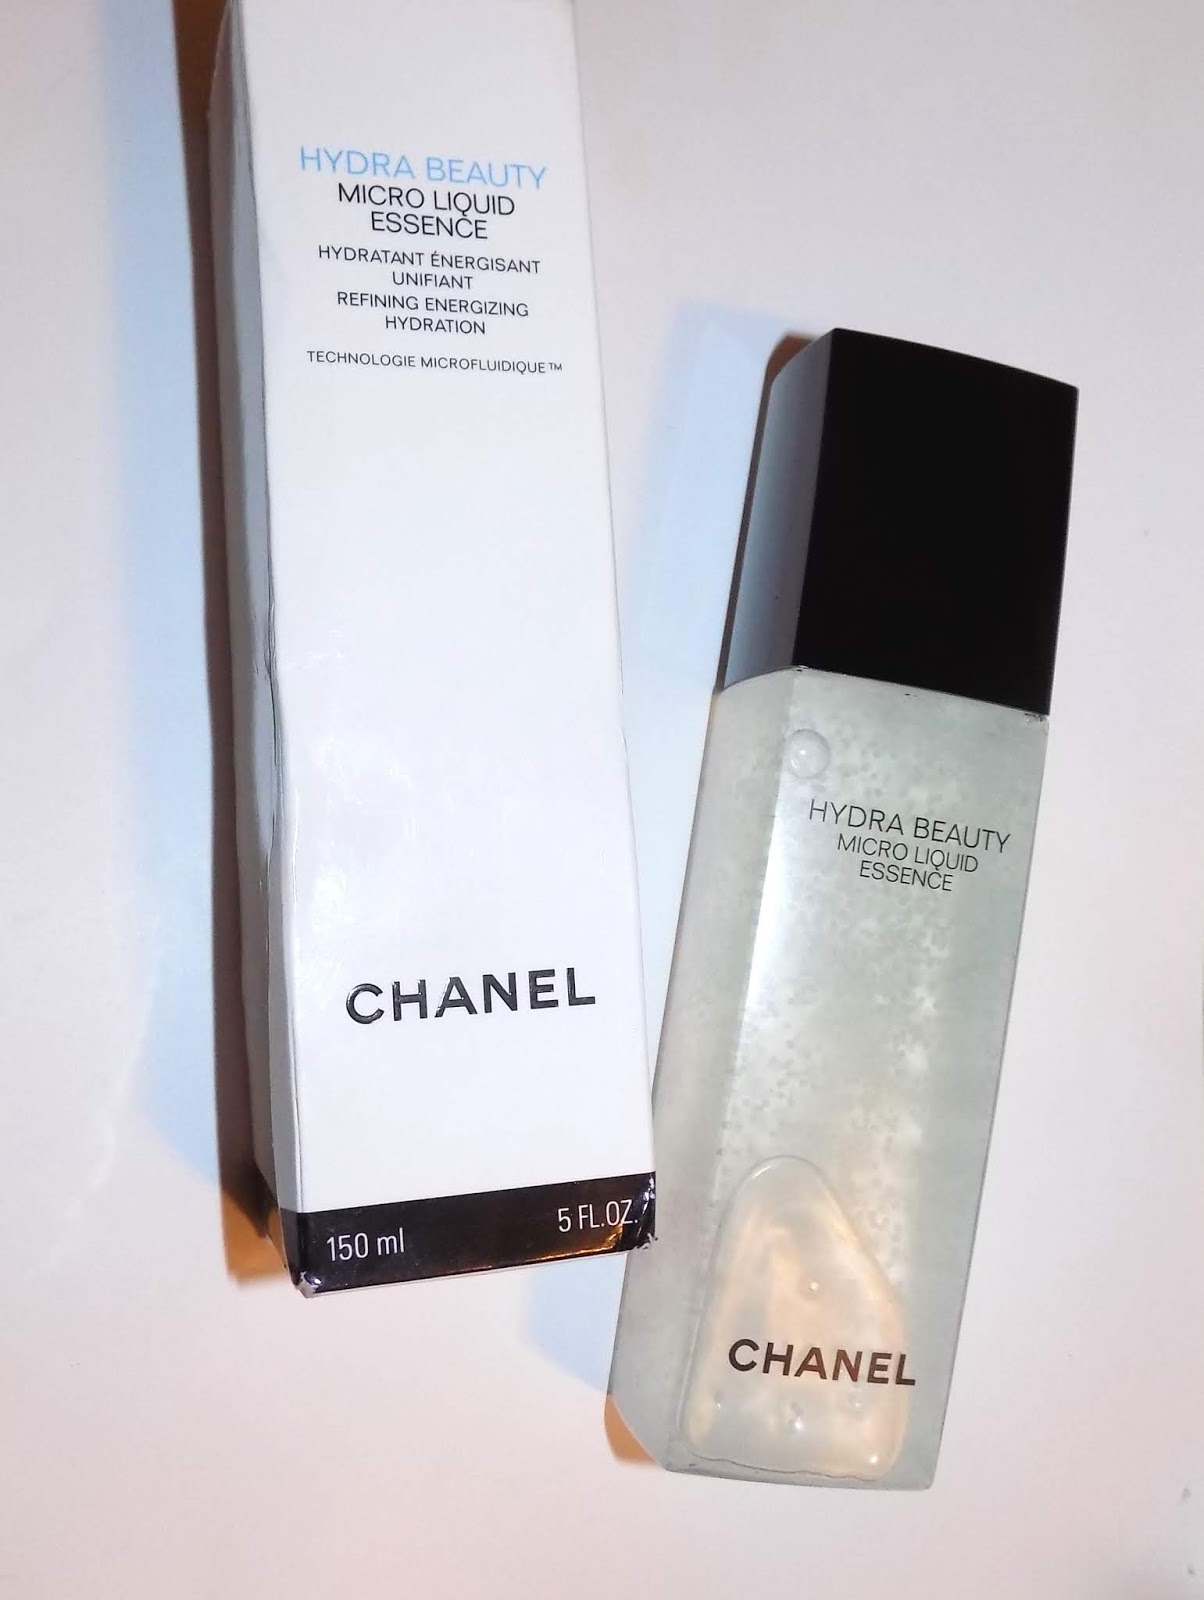 Chanel Hydra Beauty Micro Liquid Essence - Beauty Review